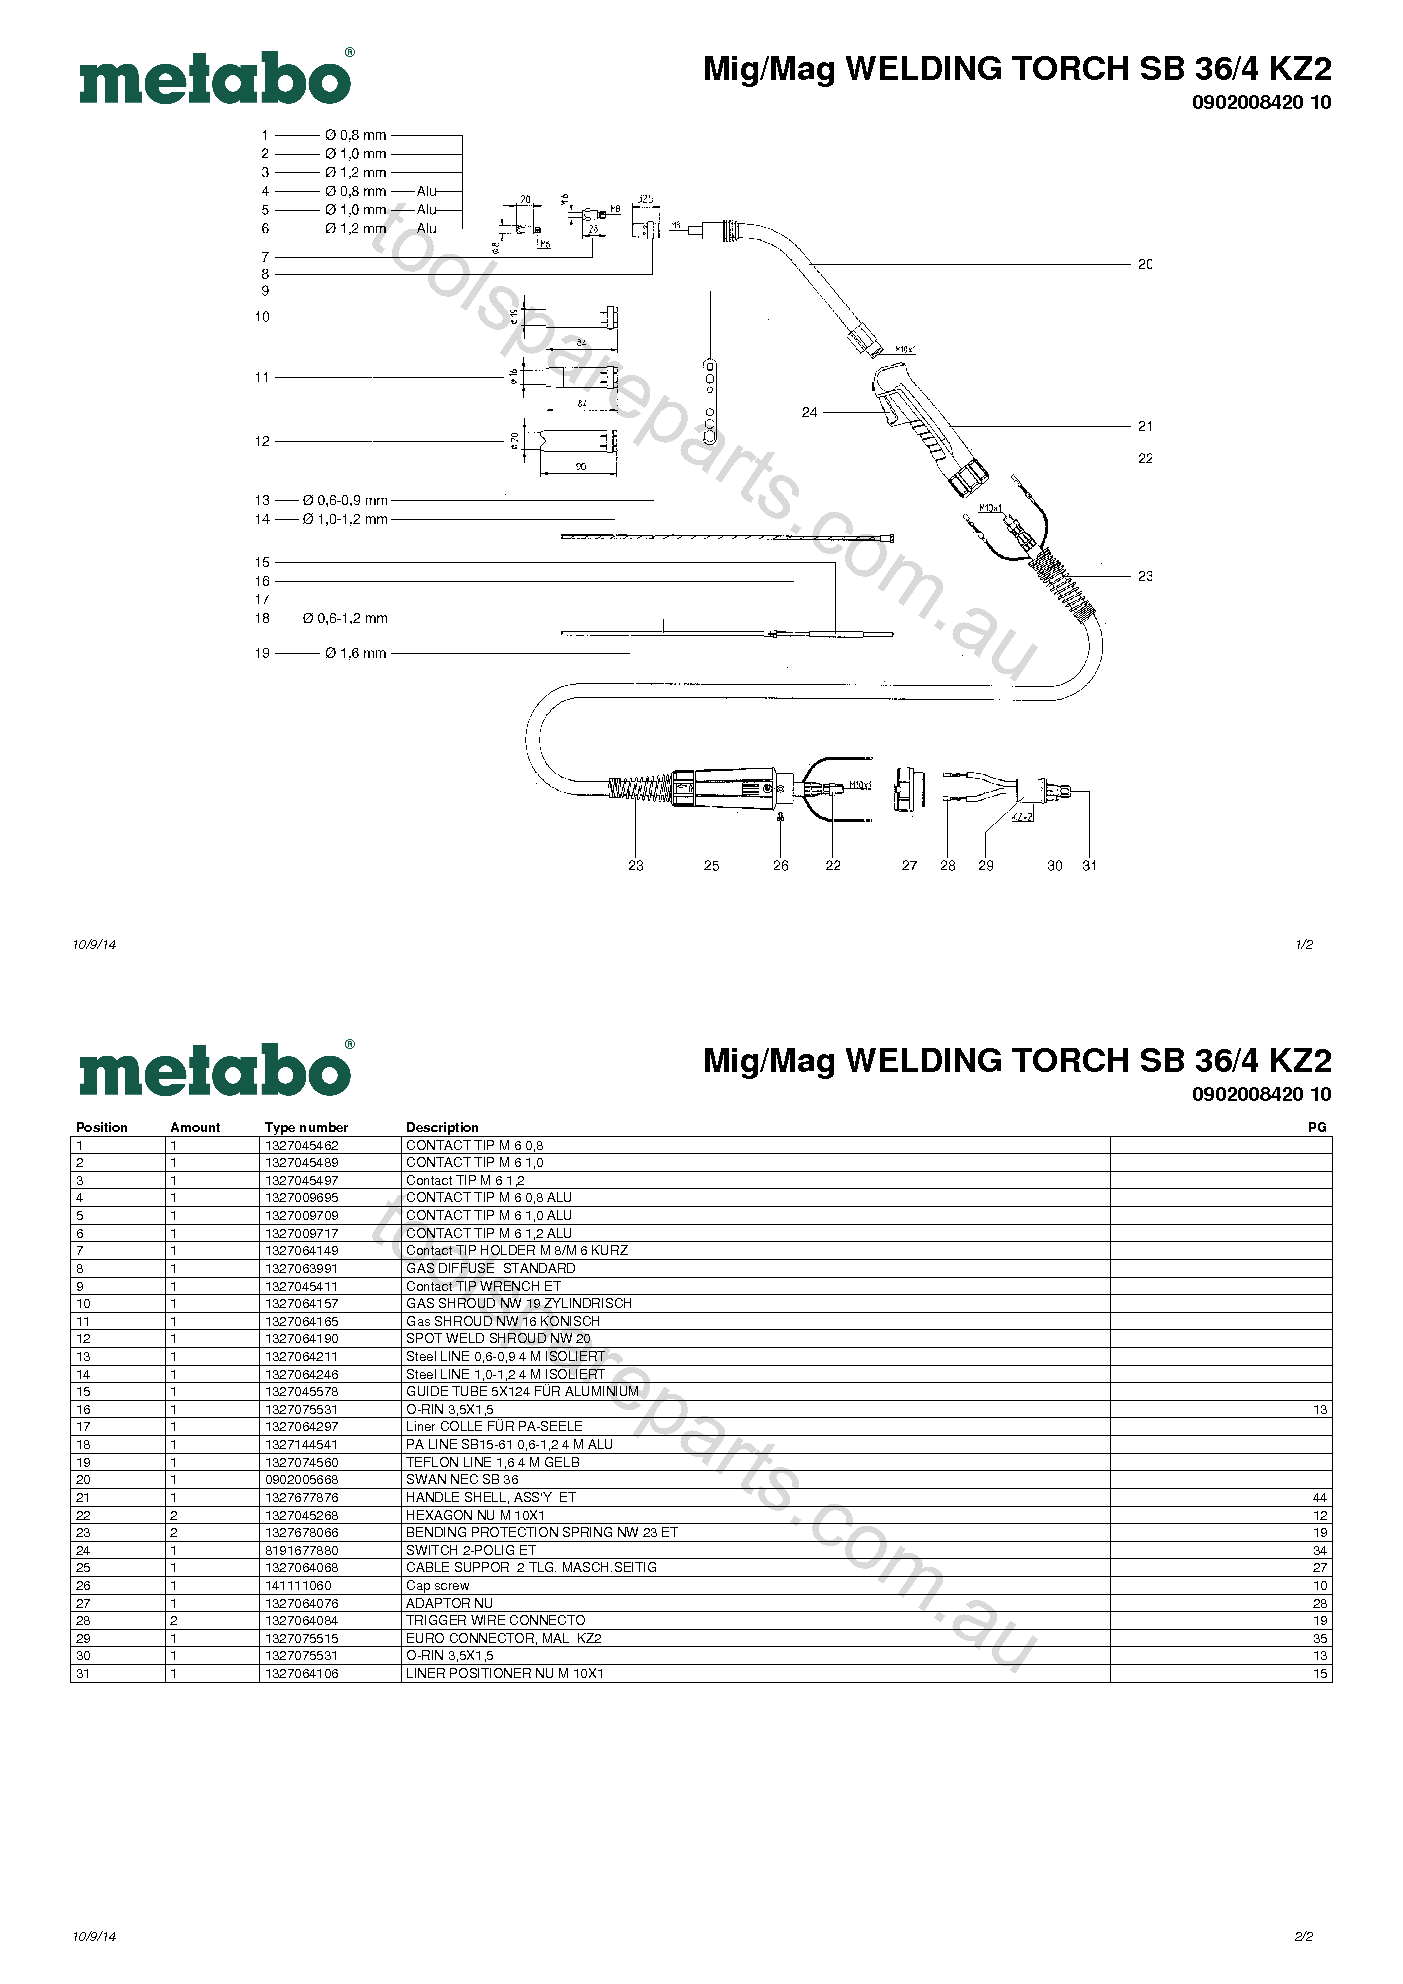 Metabo Mig/Mag WELDING TORCH SB 36/4 KZ2 0902008420 10  Diagram 1